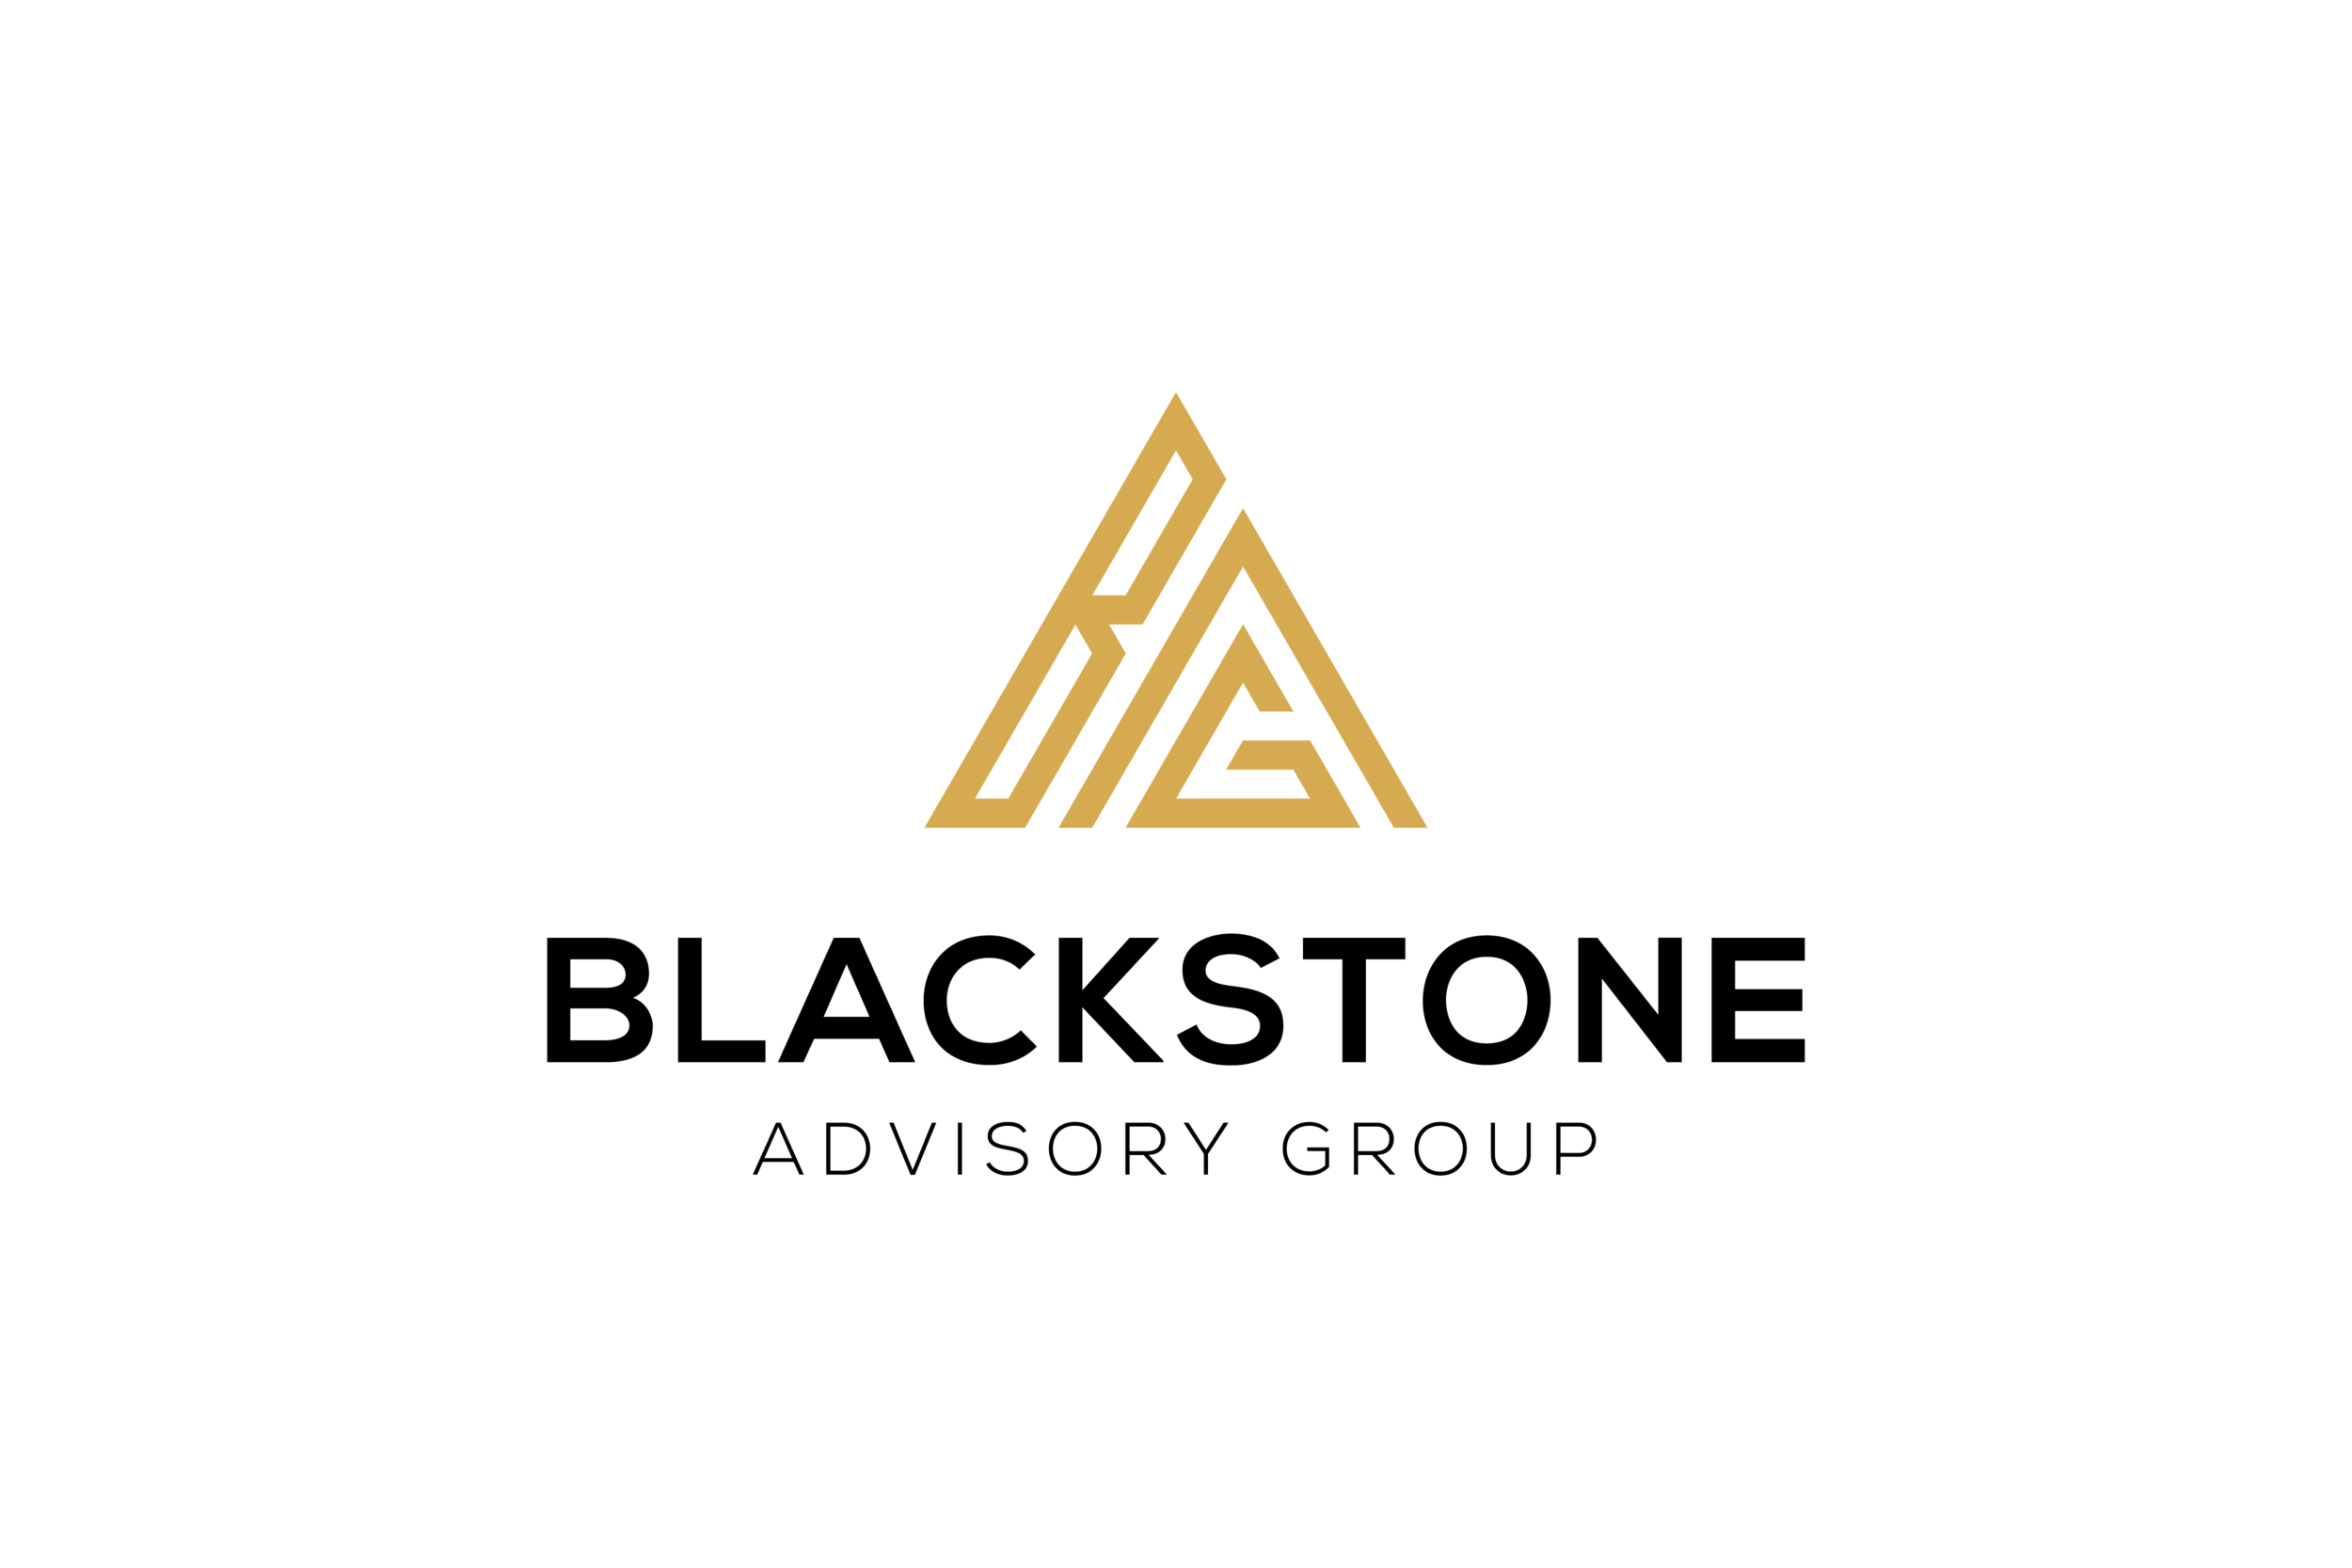 BlackStone Advisory Group